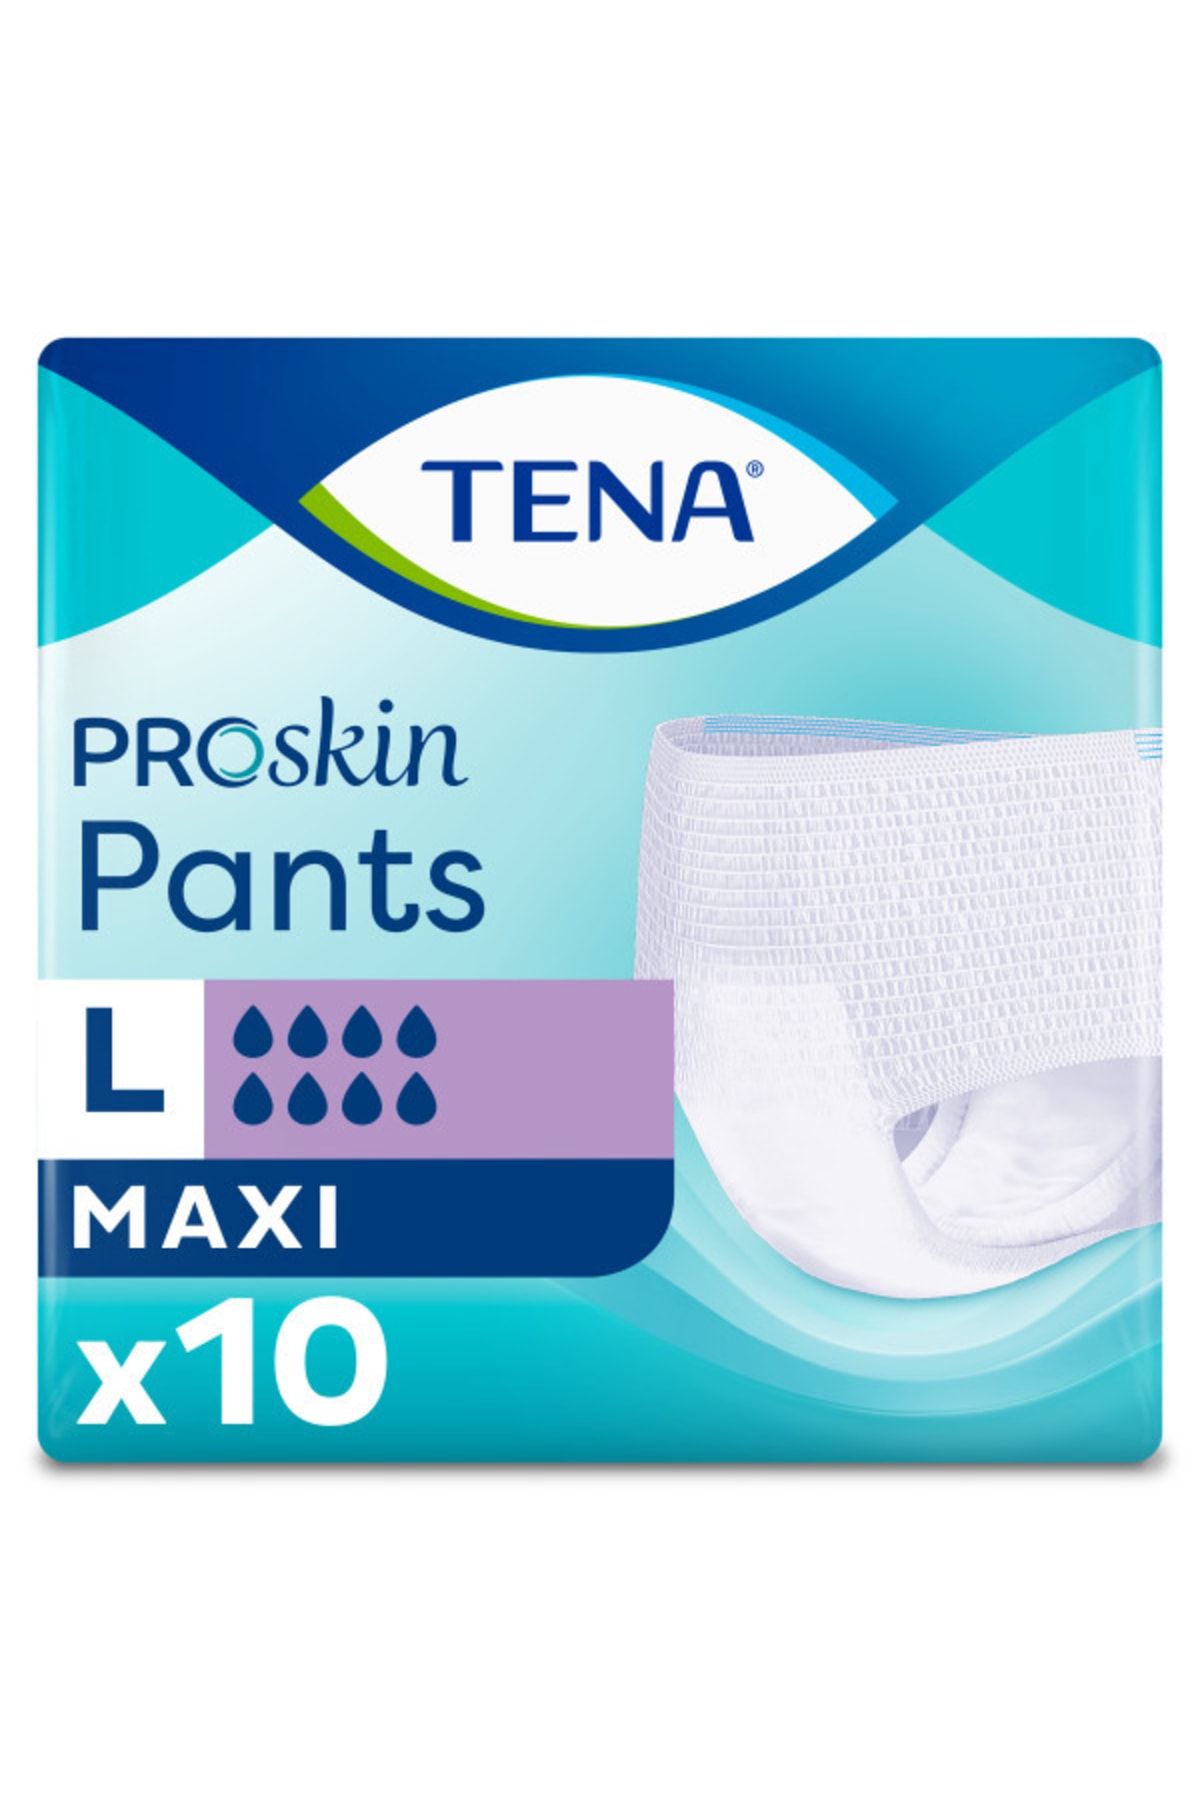 TENA Proskin Pants Maxi Emici Külot Büyük Boy l 8 Damla 10'lu Paket